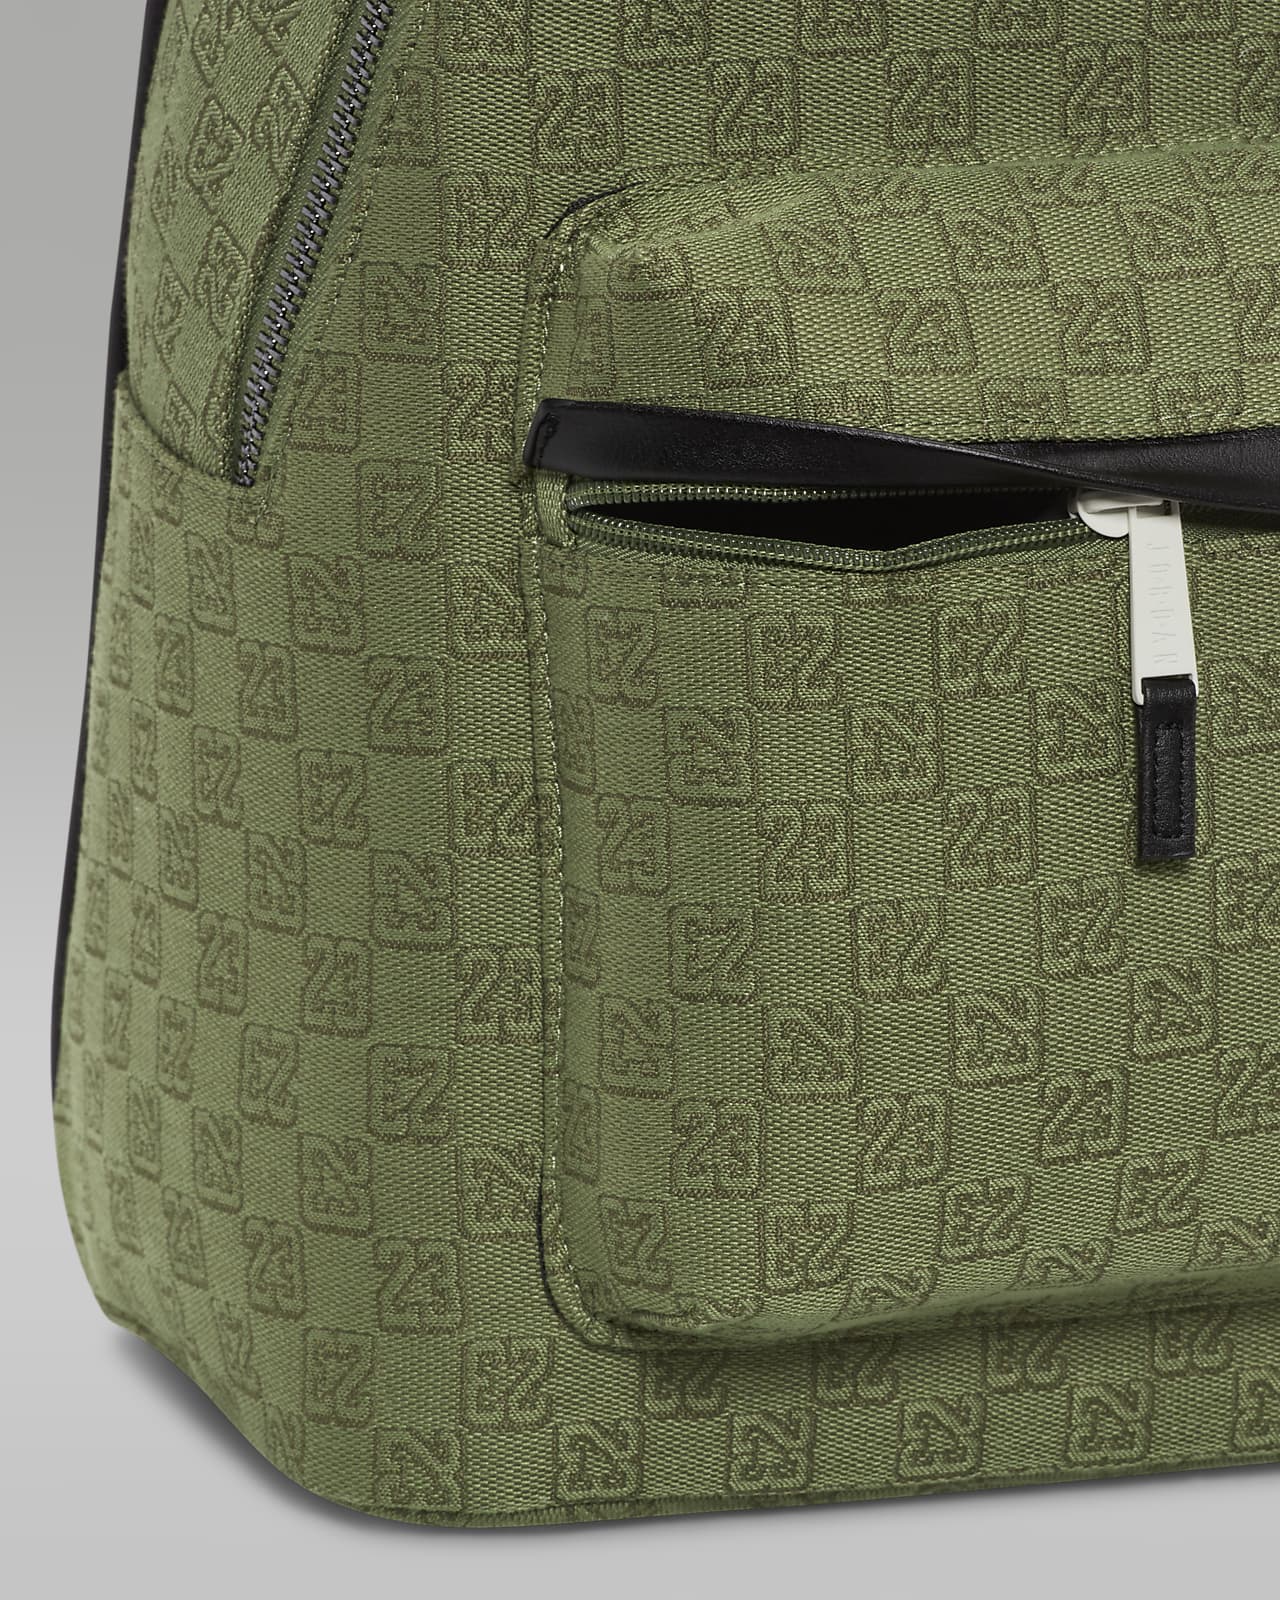 Jordan Monogram Backpack Backpack. Nike.com